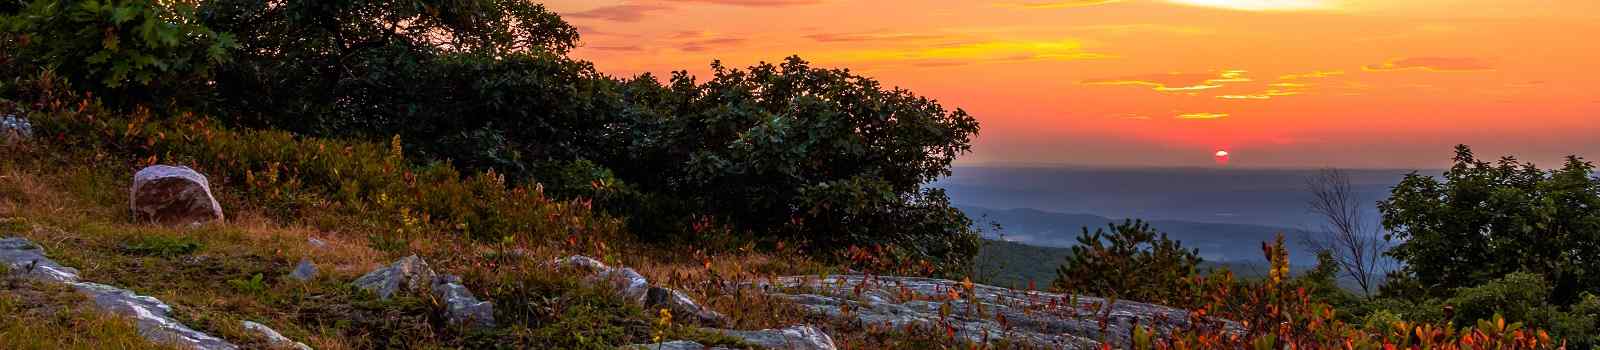 KL-USA-APPALACHIAN Farbige Blaubeerbuesche sind von felsigen Granitausbruechen im High Point State Park  New Jersey Sunset umgeben shutterstock 485668780